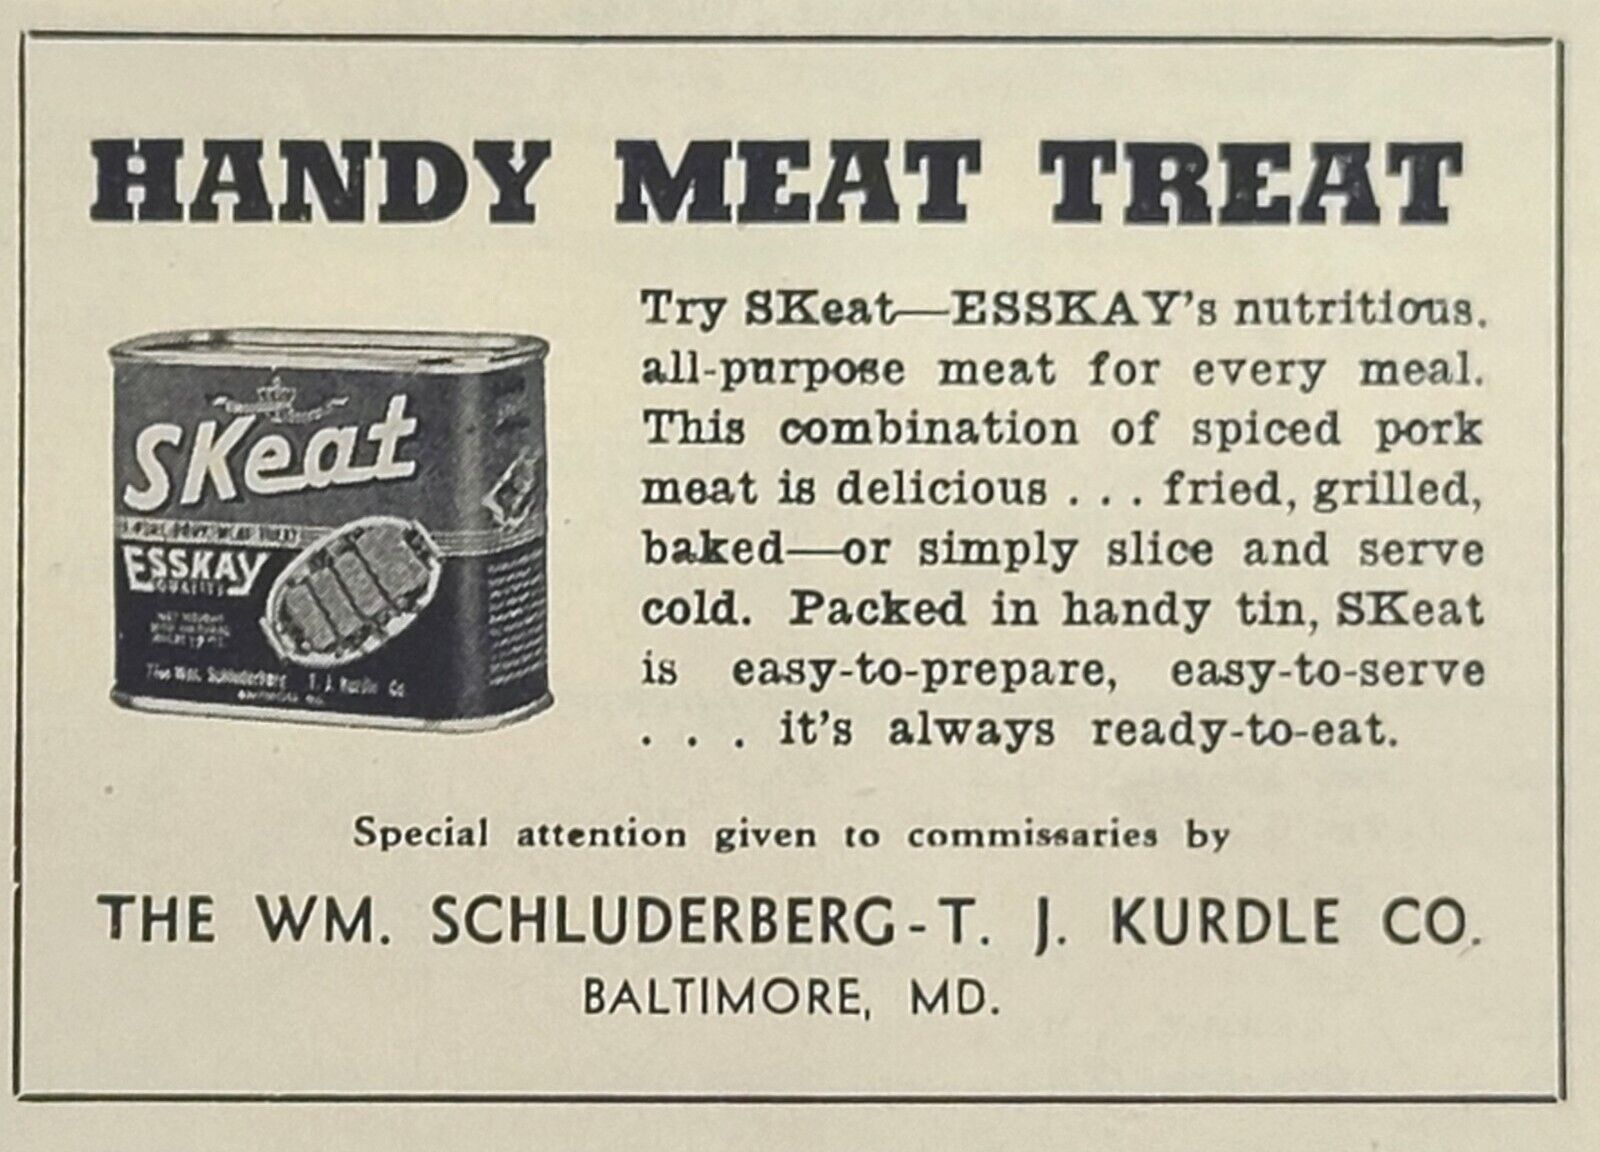 Esskay Skeat Handy Meat Treat Canned Spiced Pork Baltimore Vintage Print Ad 1944